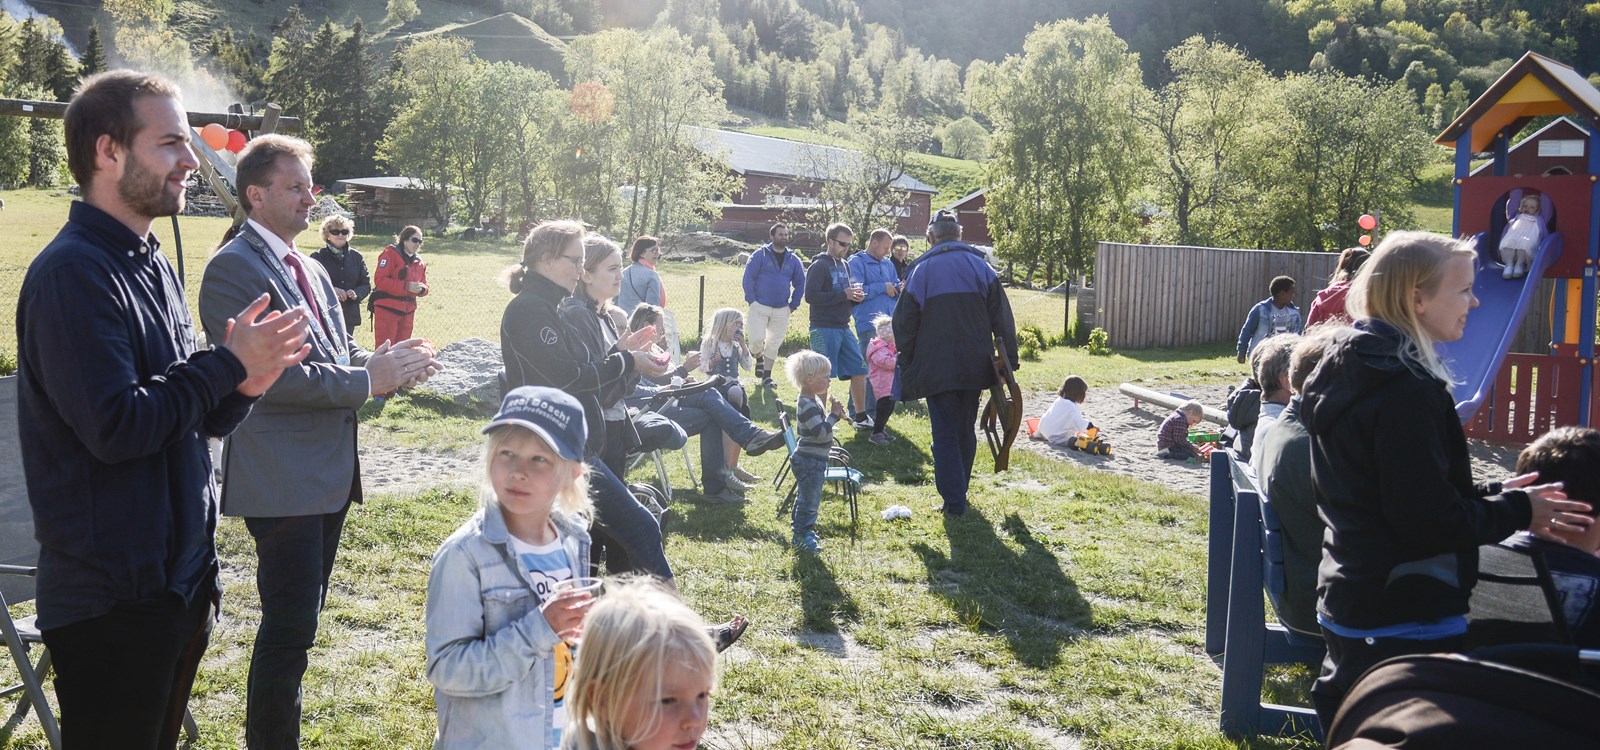 Øyefestivalen (7 of 9).jpg